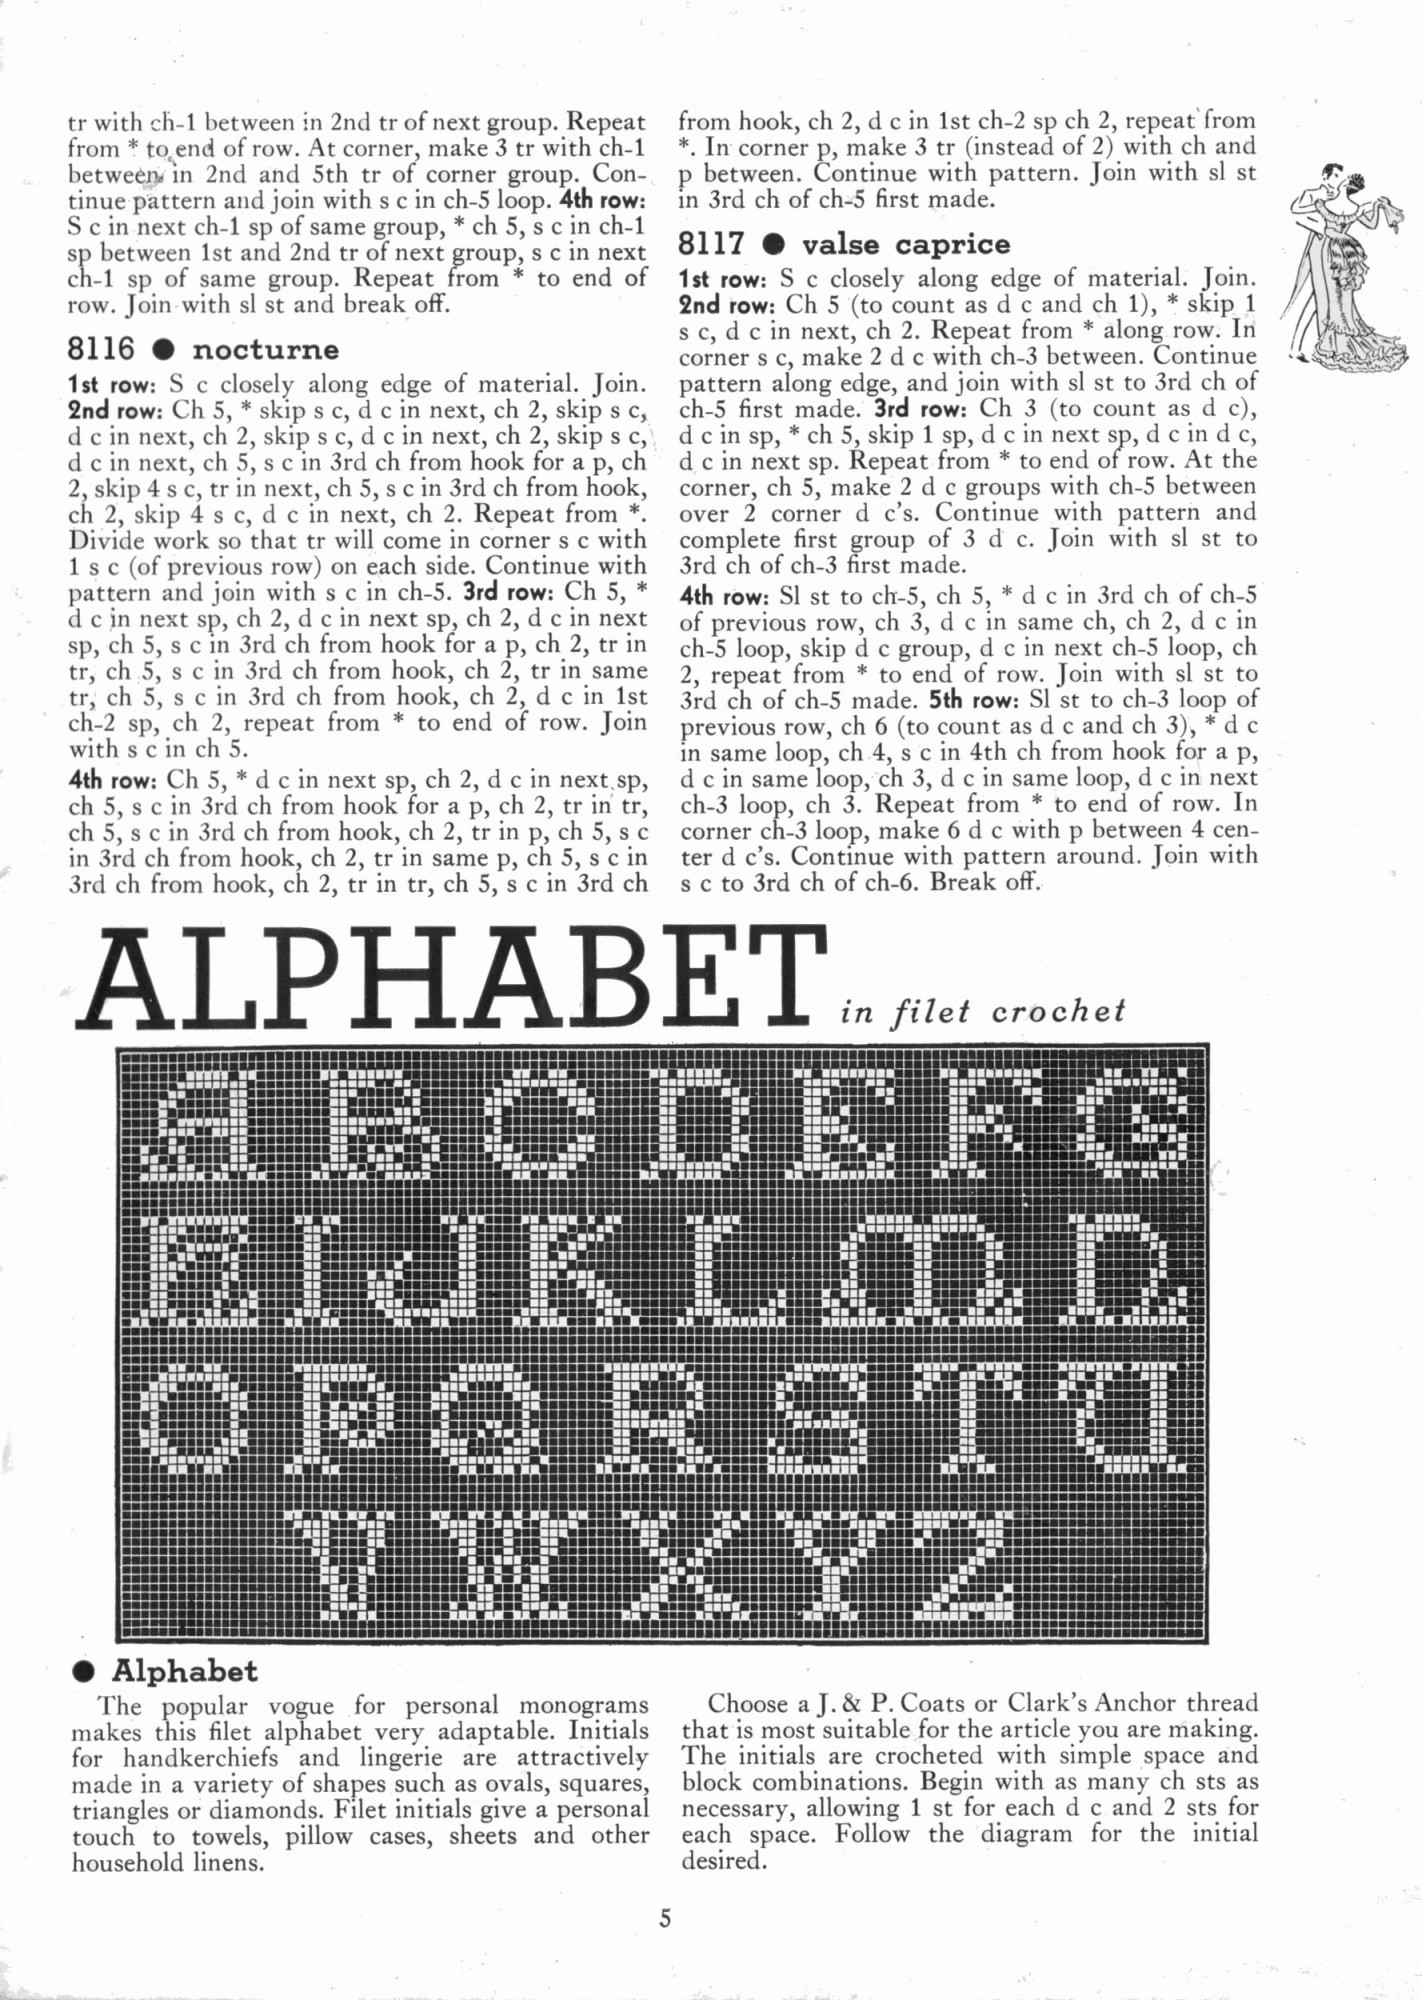 alphabet filet crochet